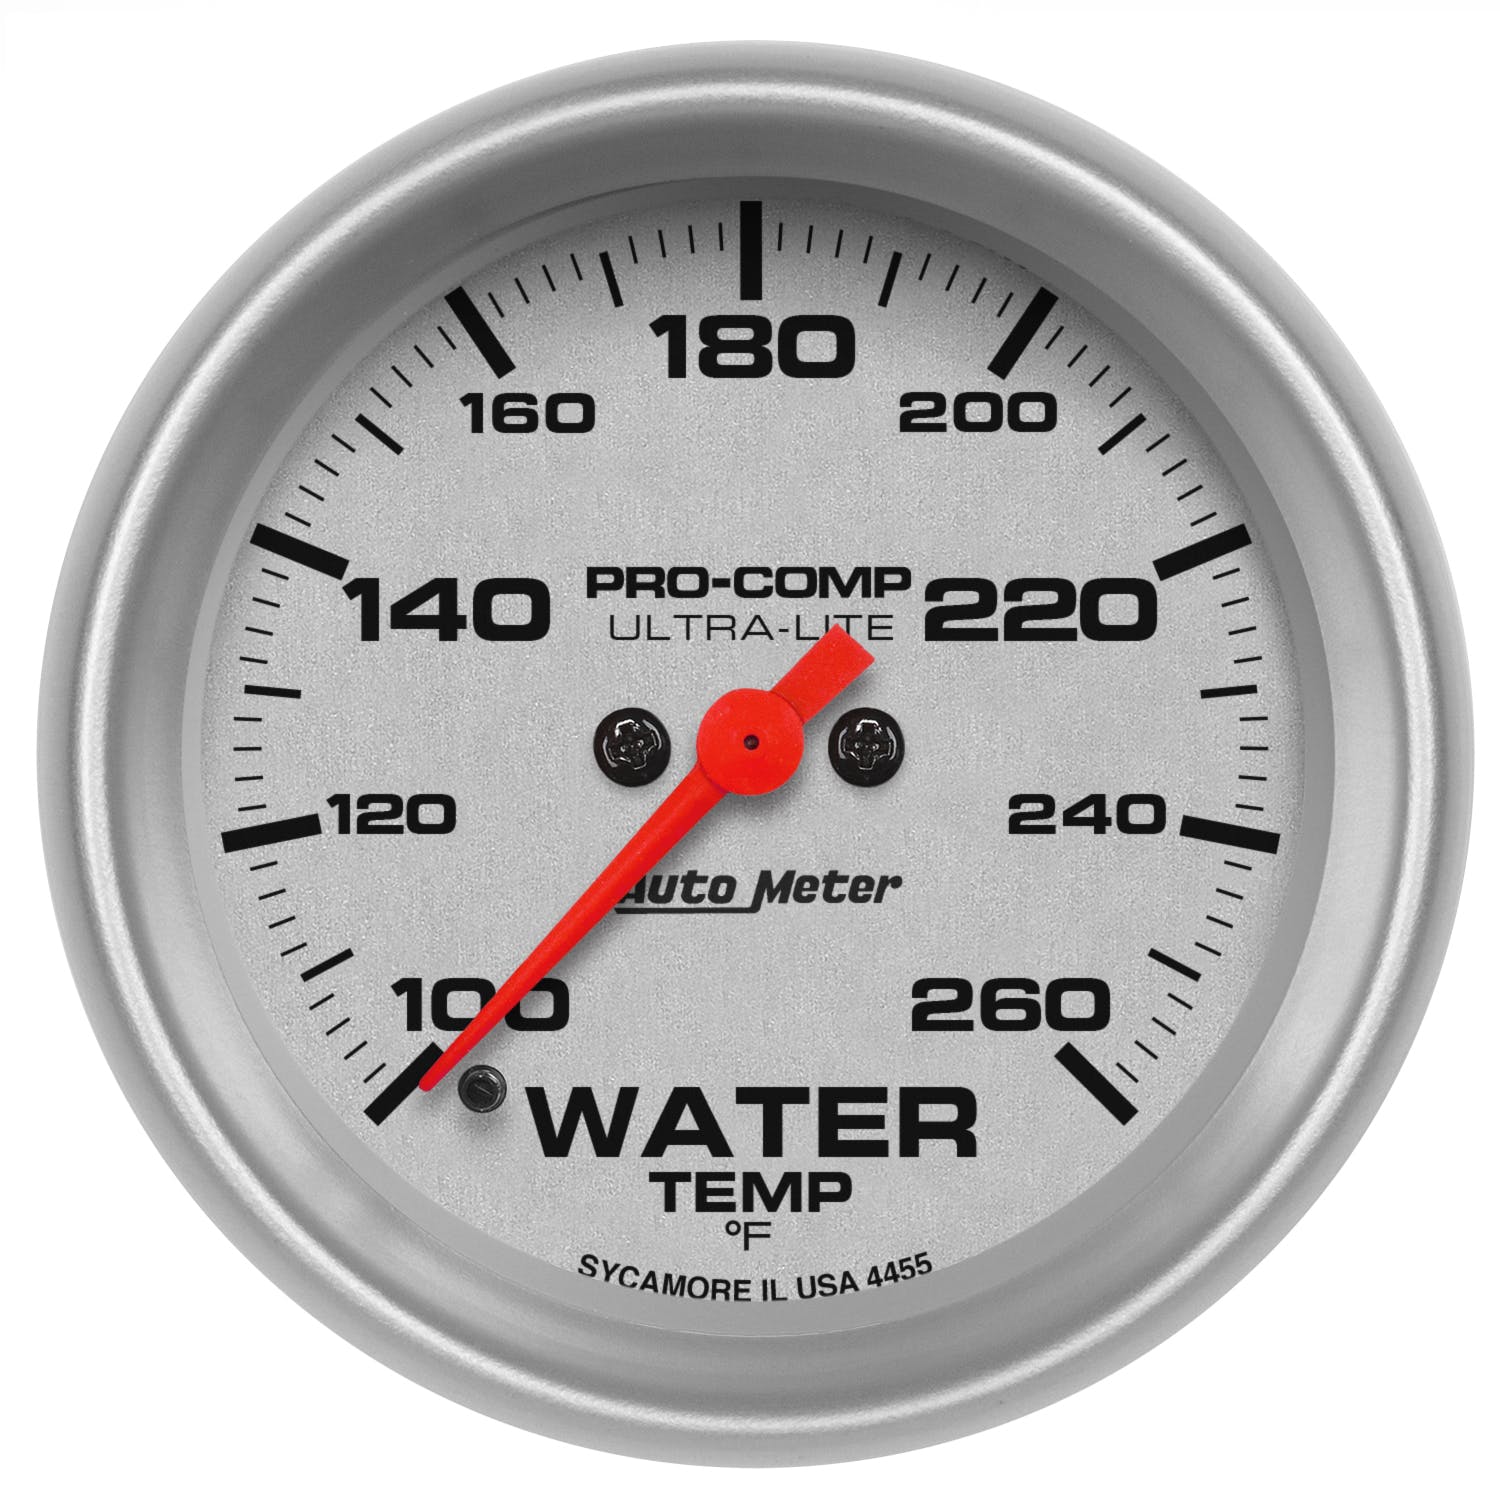 AutoMeter Products 4455 Water Temperature Gauge, 2 5/8, 260° F, Digital Stepper Motor, Ultra-Lite